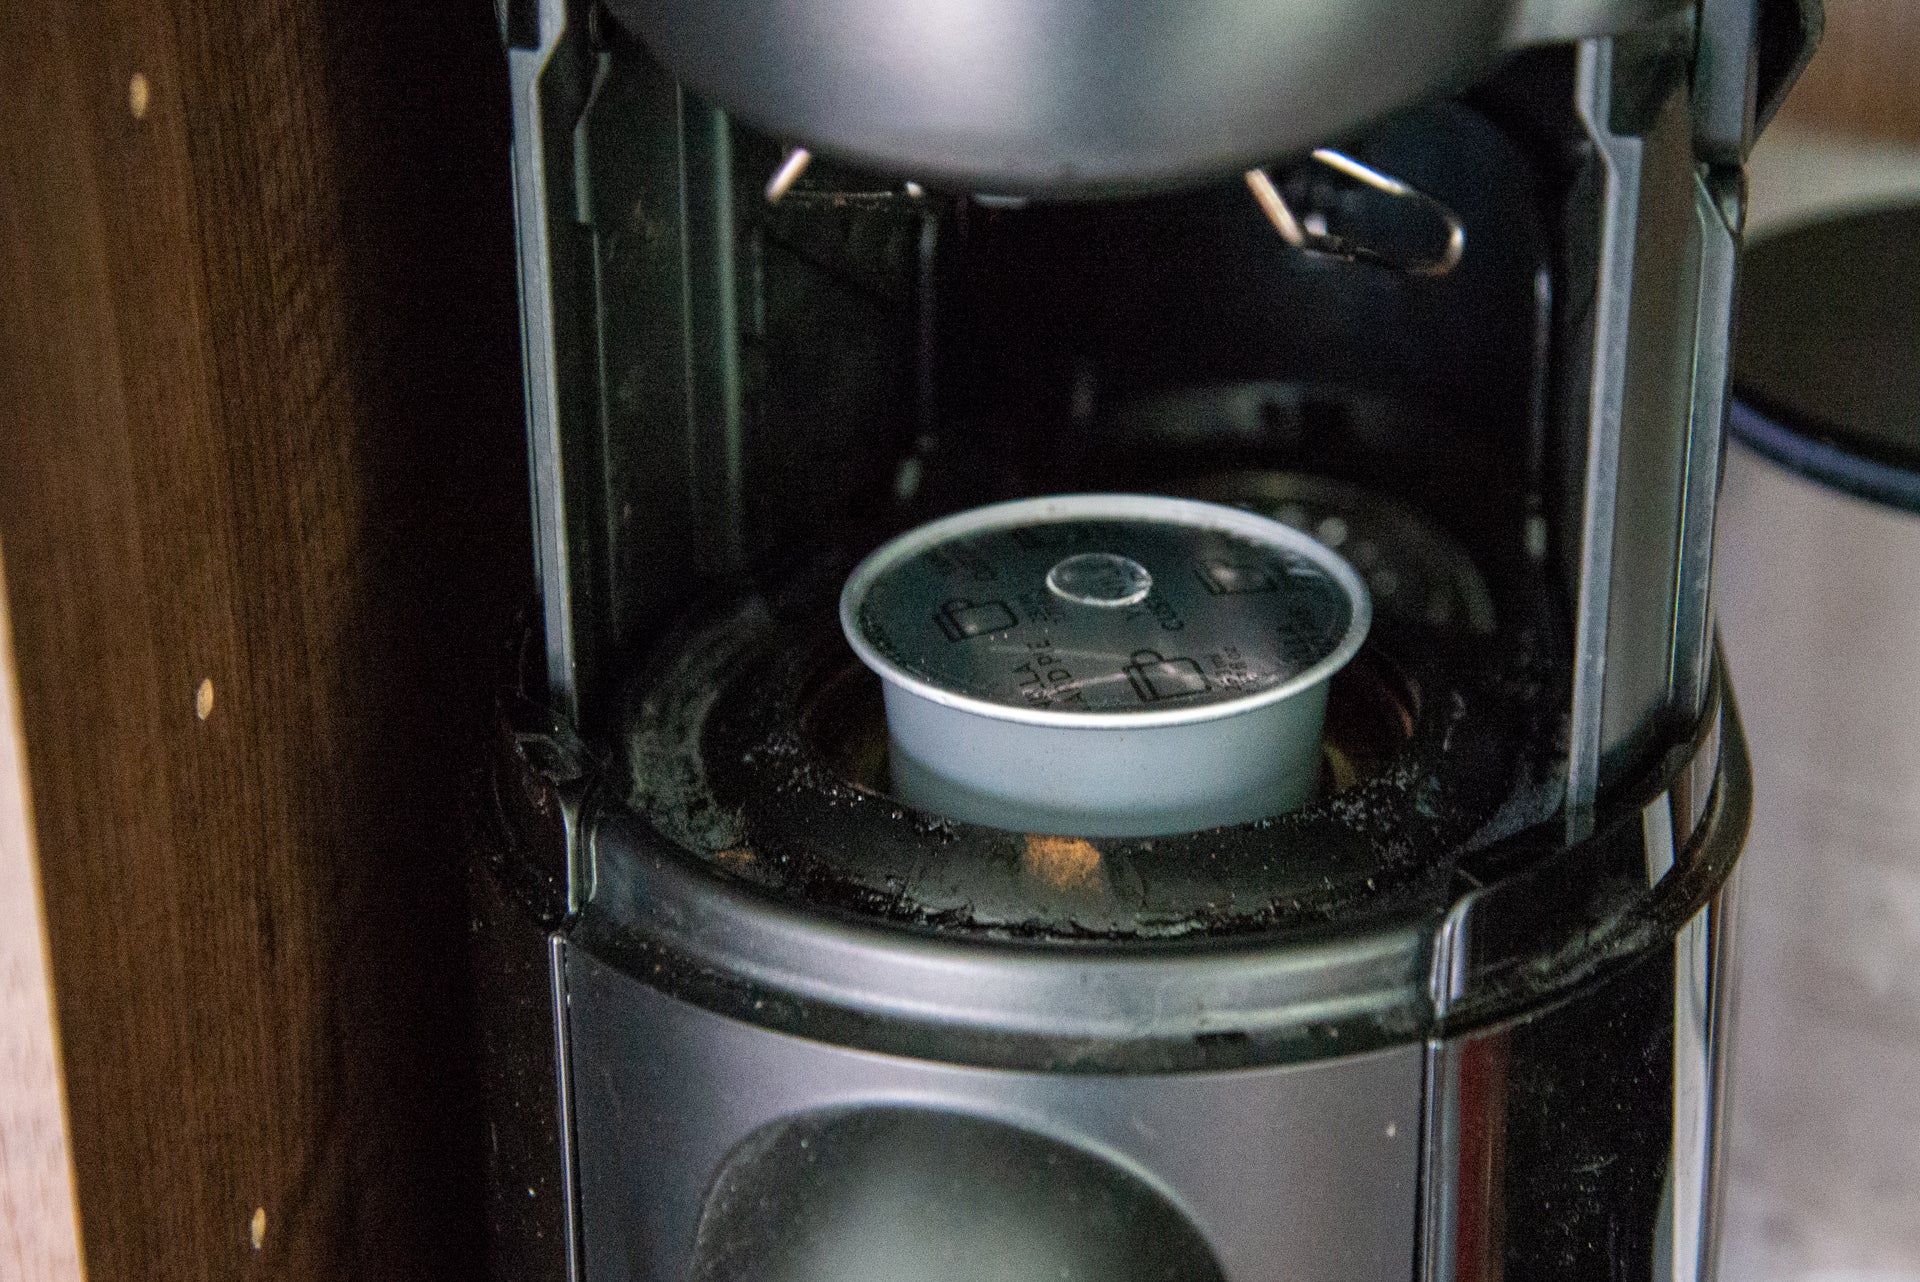 Nespresso Vertuo capsule inserted